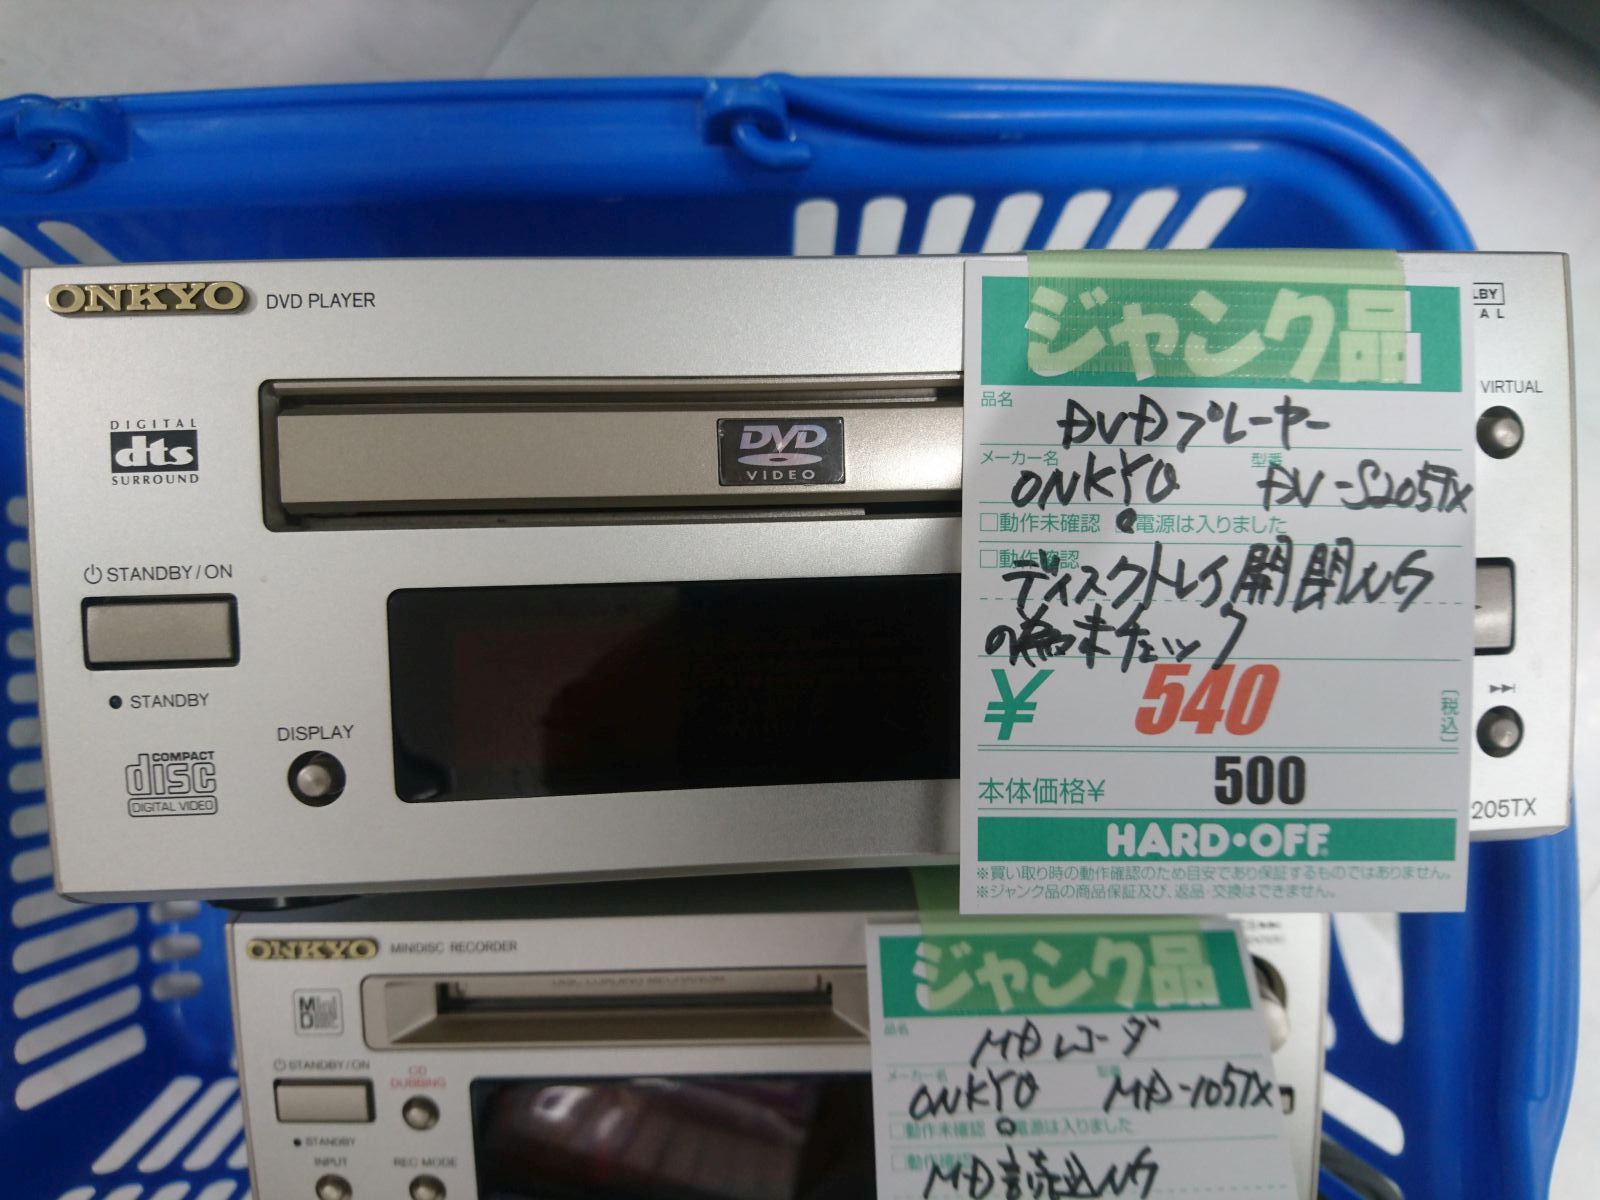 ONKYO DVDデッキ DV-S205TX ジャンク修理(敗北) | 自由日記J -ジャンカーへの道-